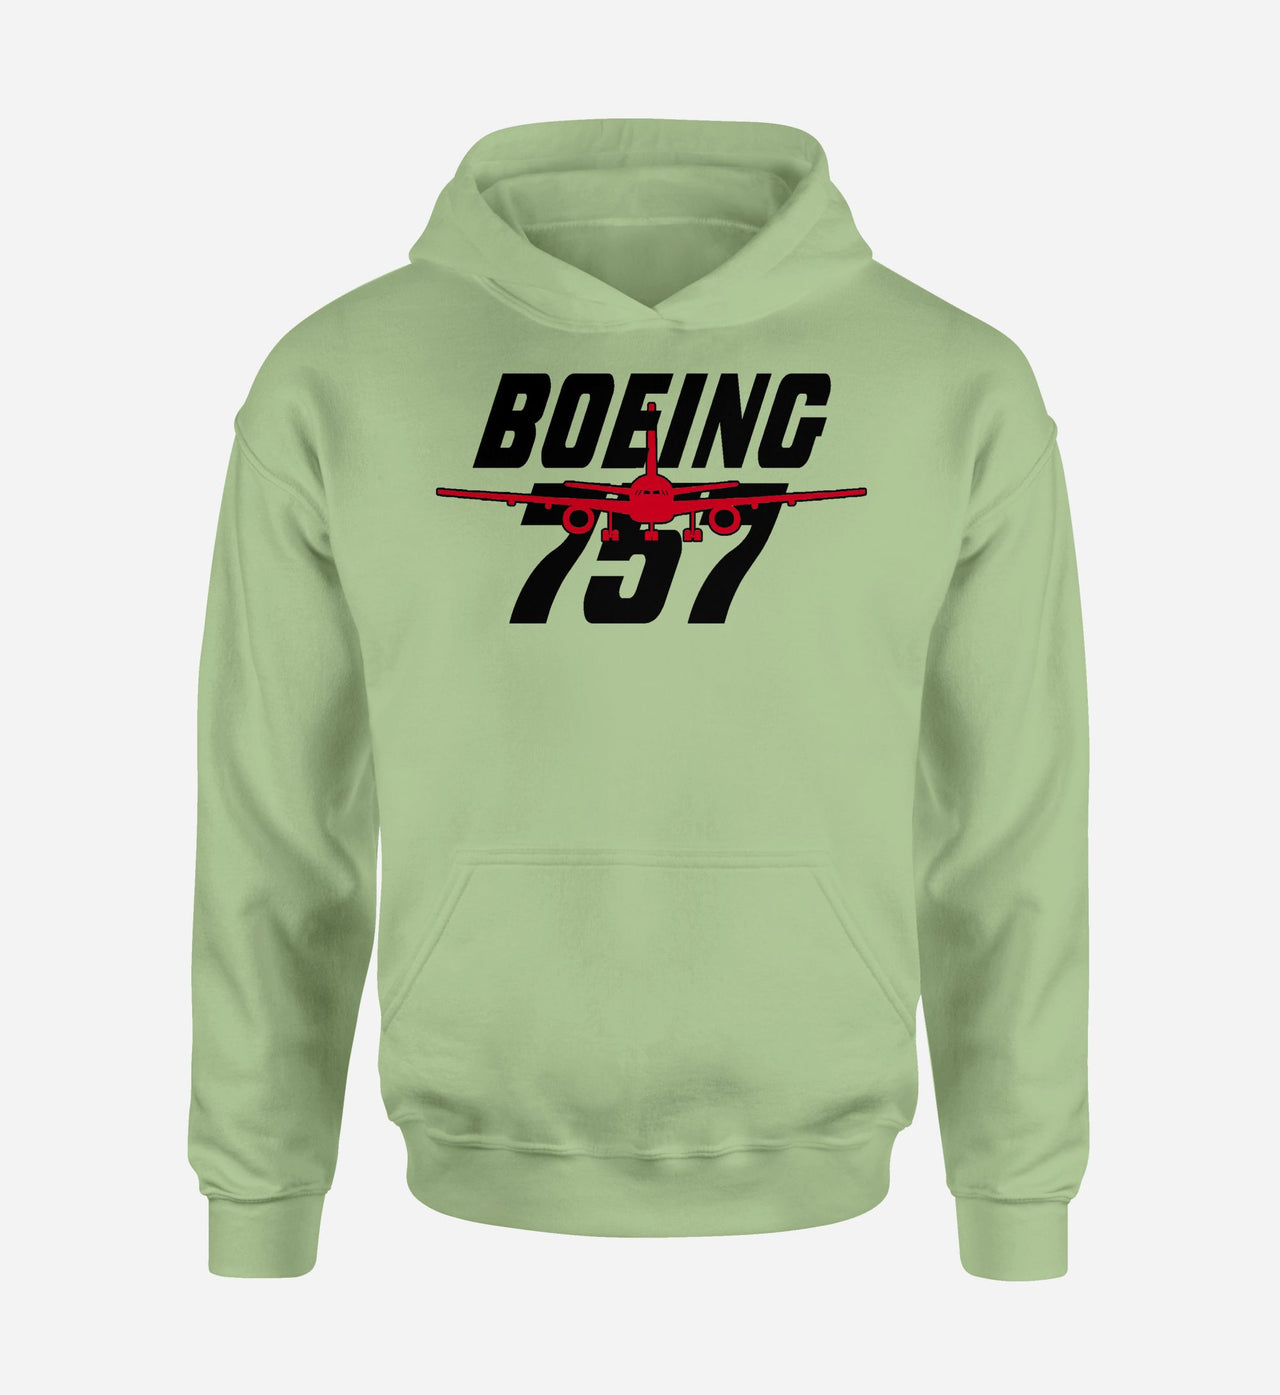 Amazing Boeing 757 Designed Hoodies